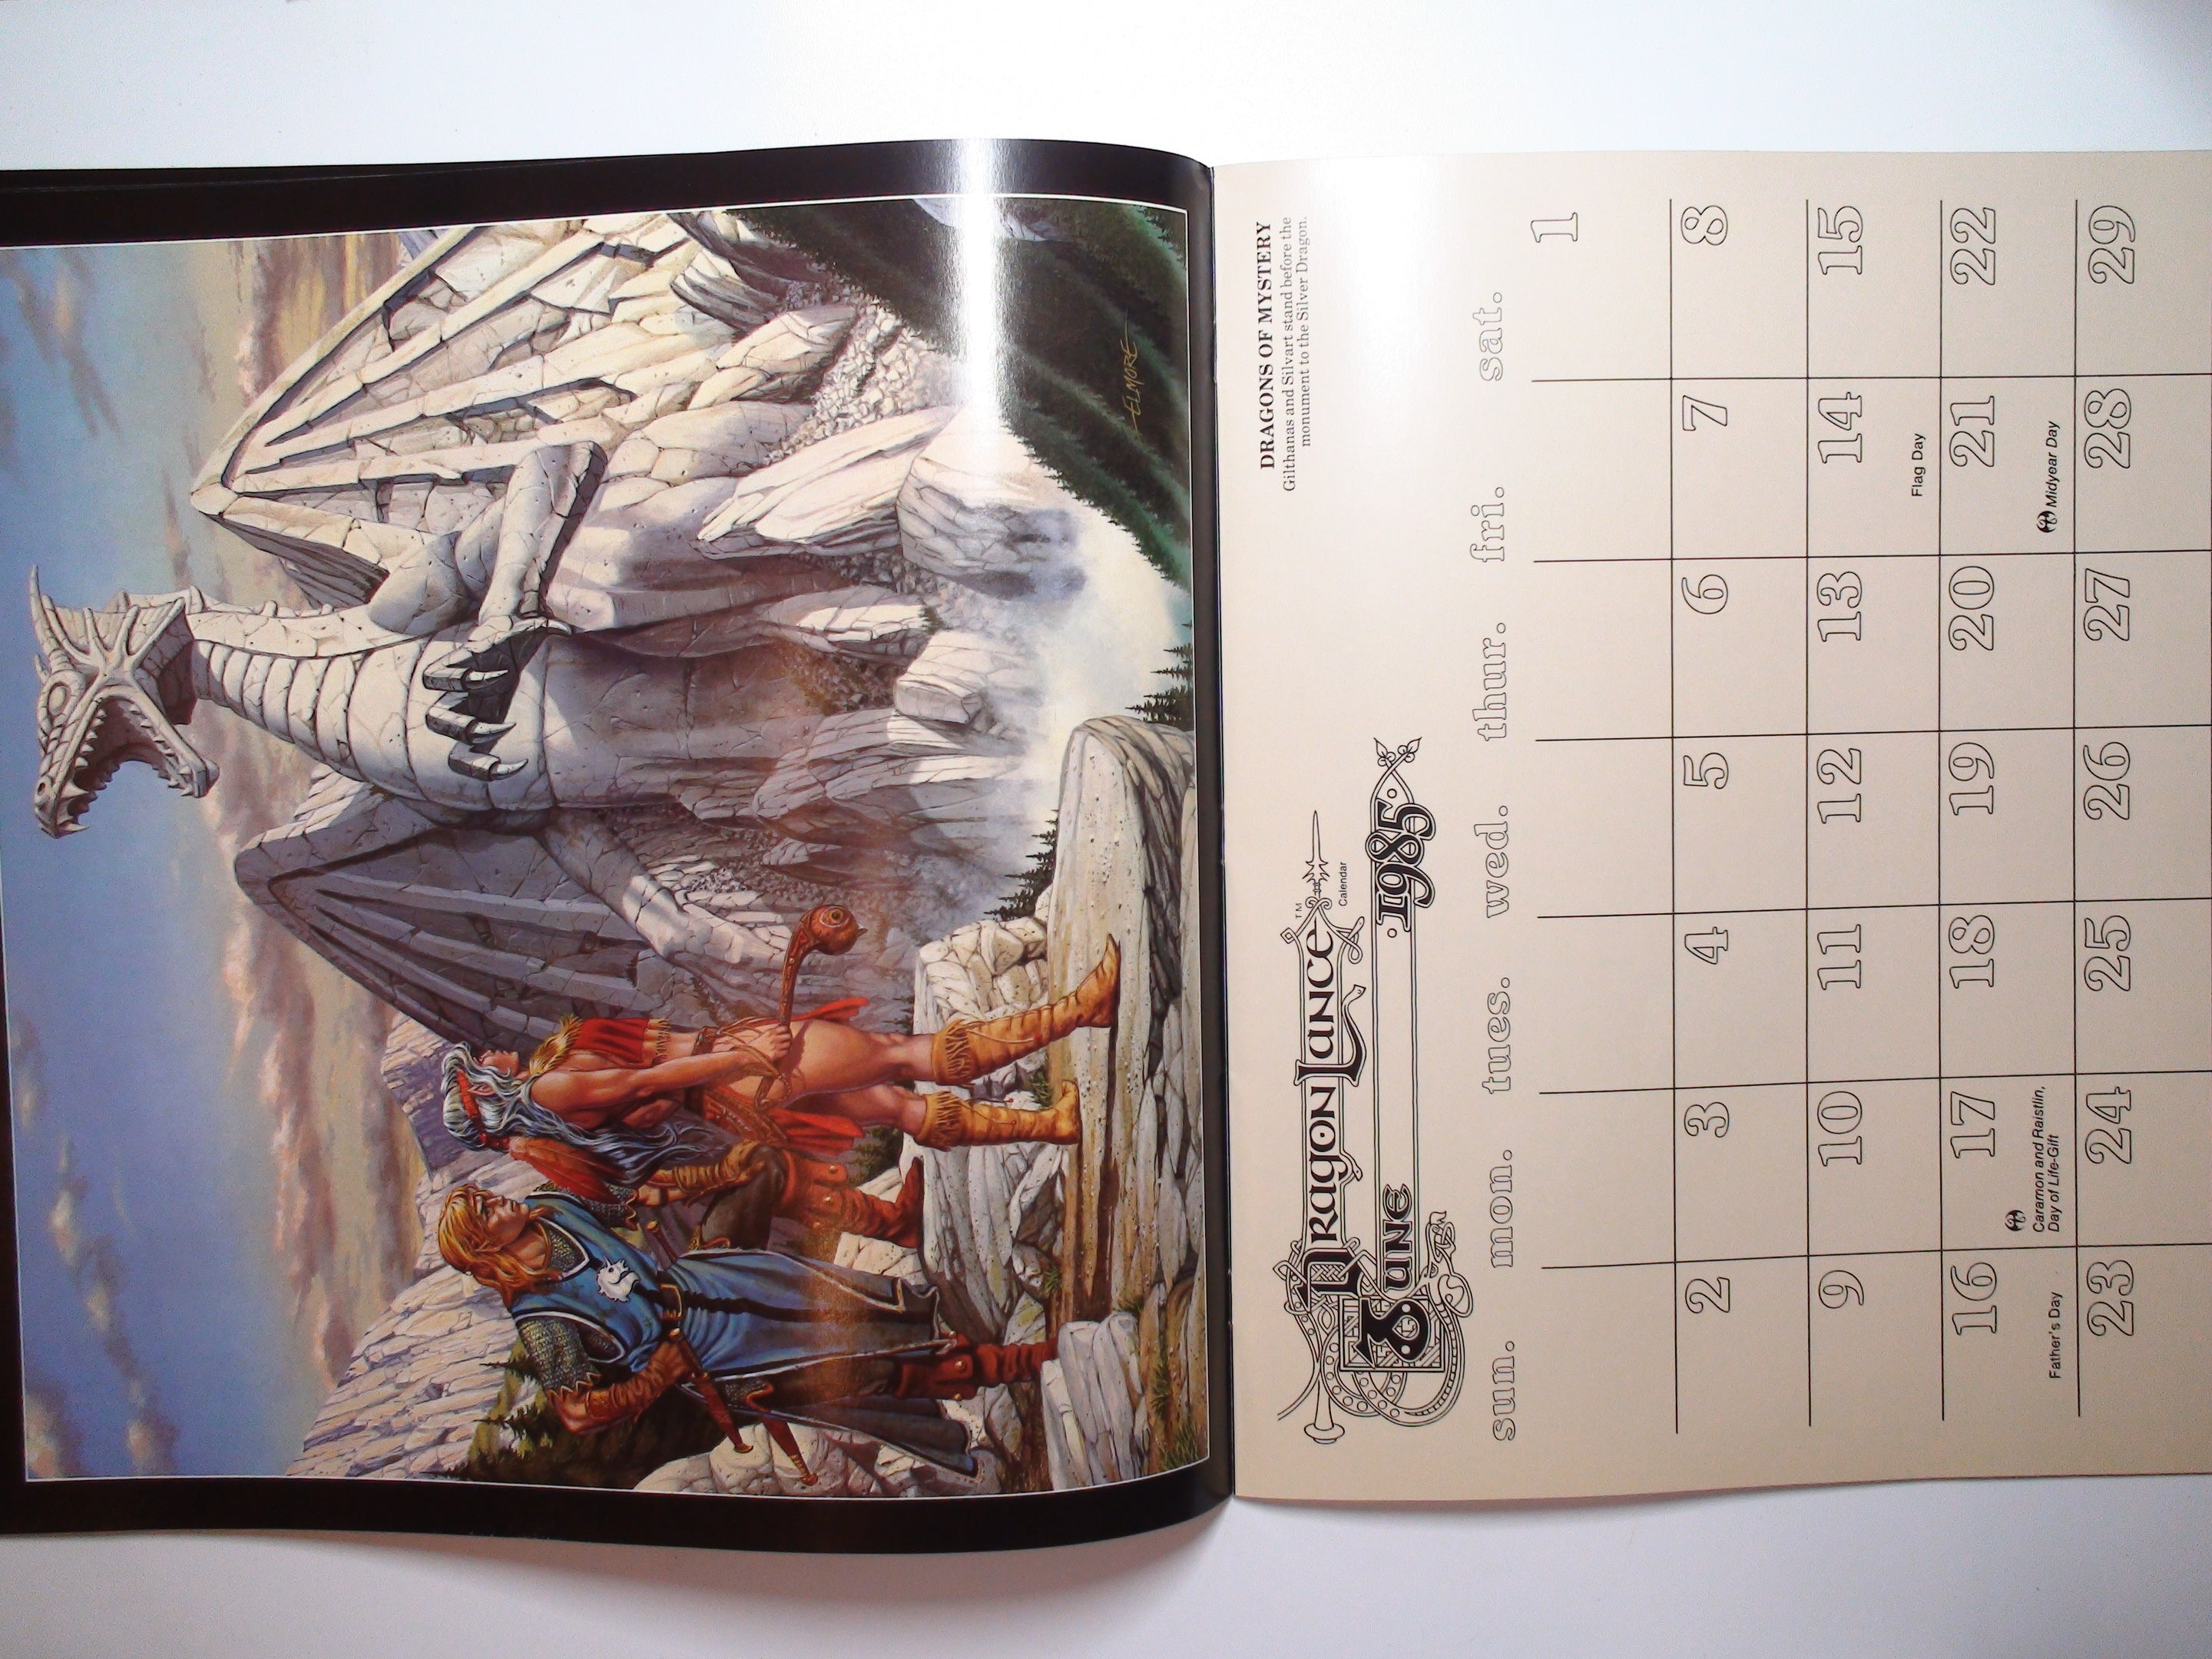 Dragonlance, Dungeons & Dragons 1985 Fantasy Calendar, Collectible